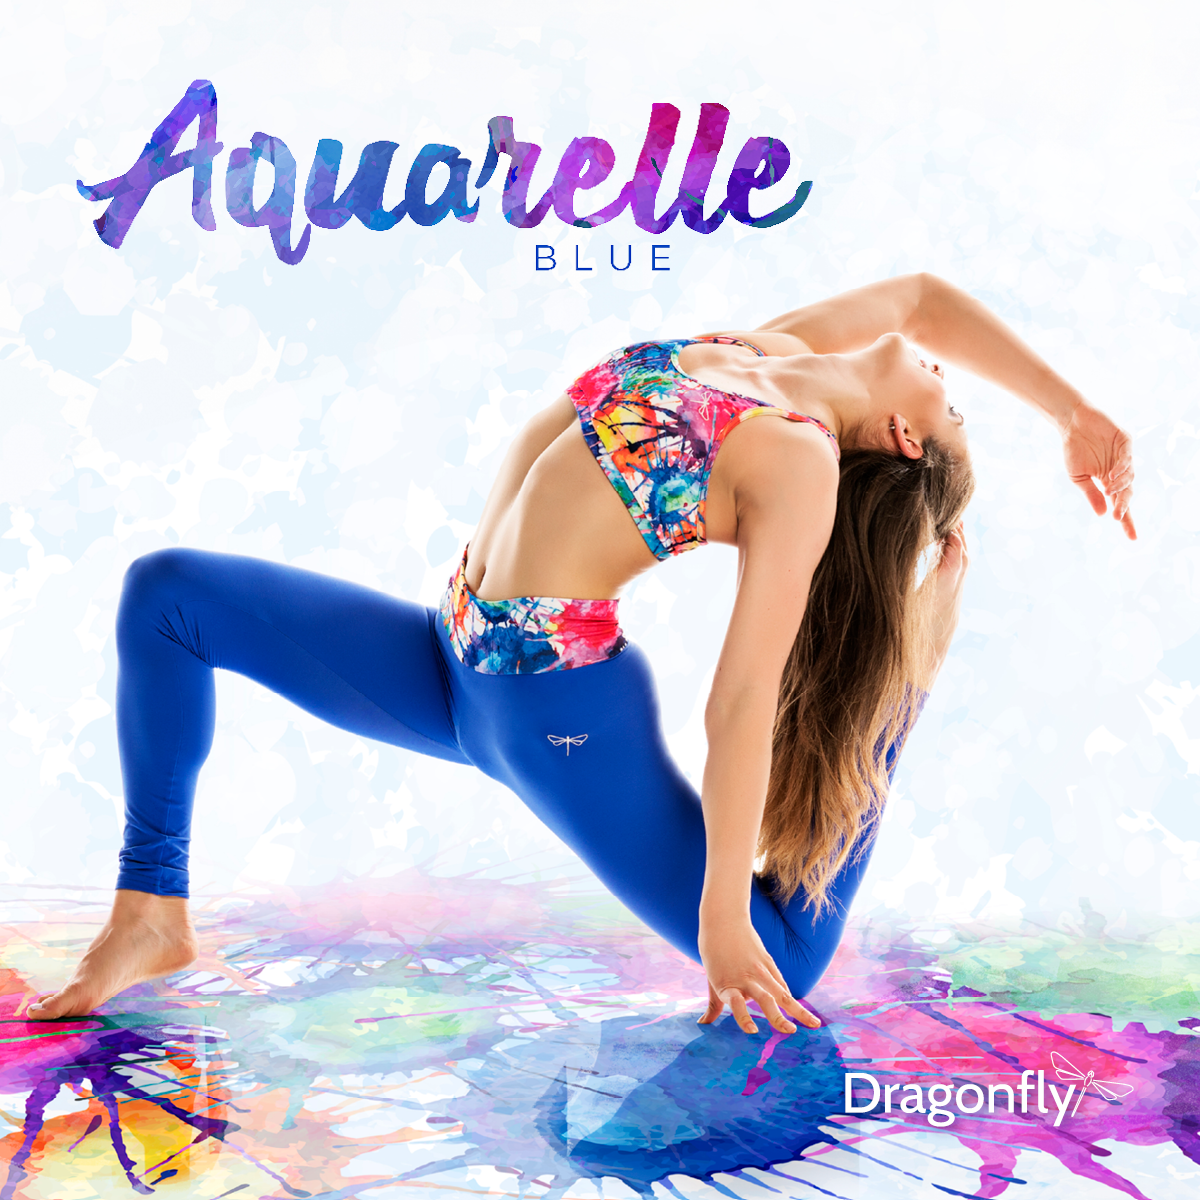 Blue Aquarelle Limited Edition Pole Wear